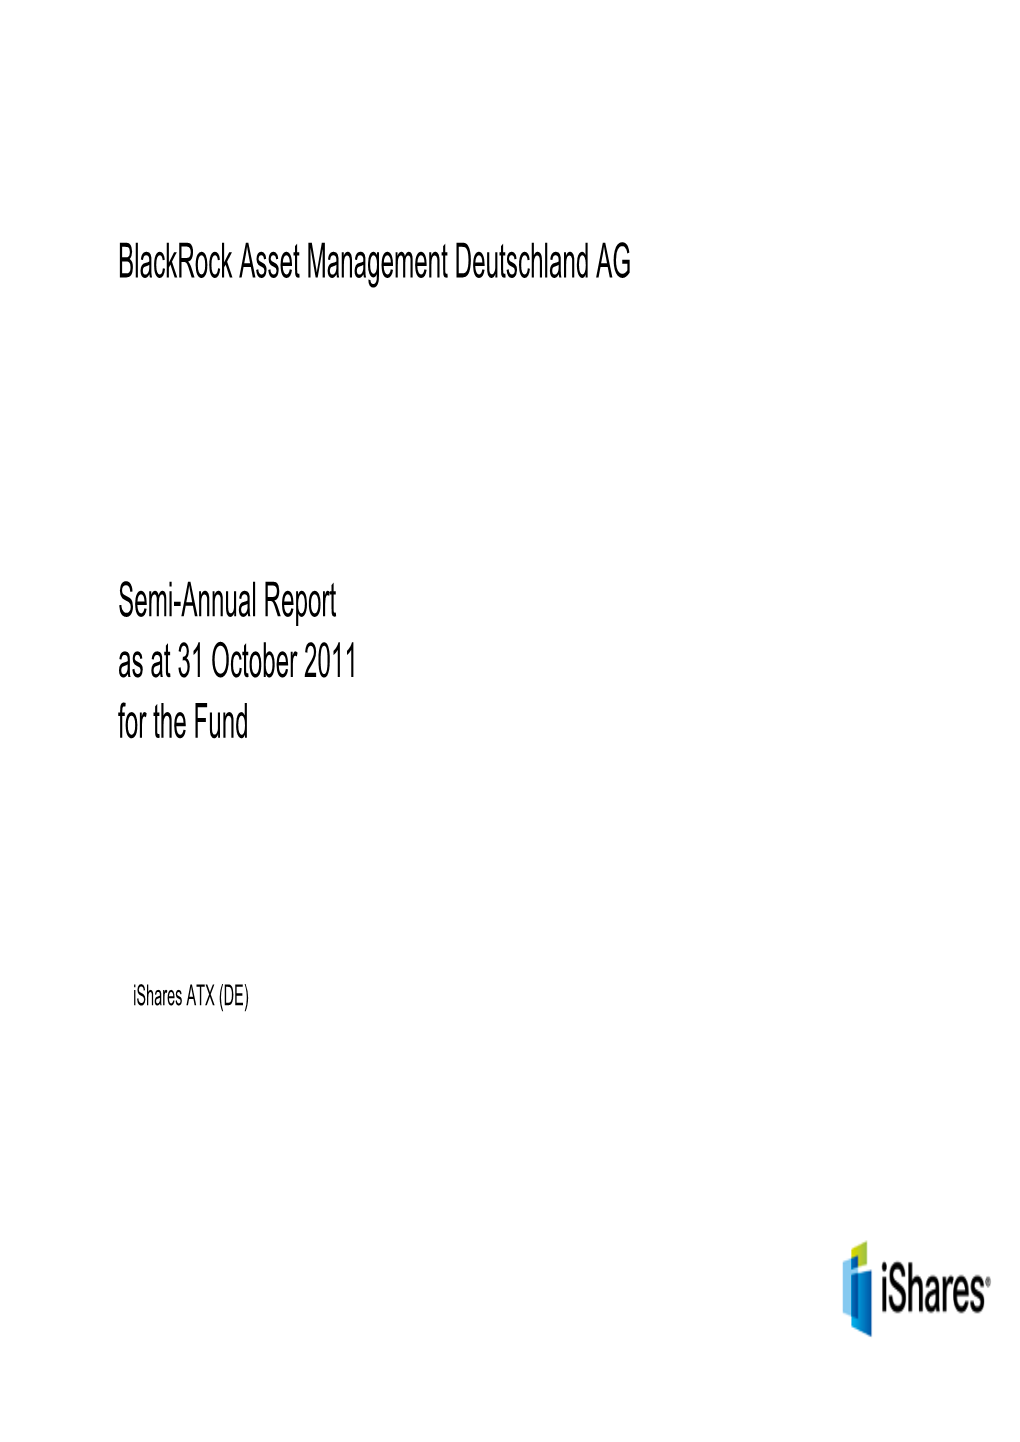 Blackrock Asset Management Deutschland AG